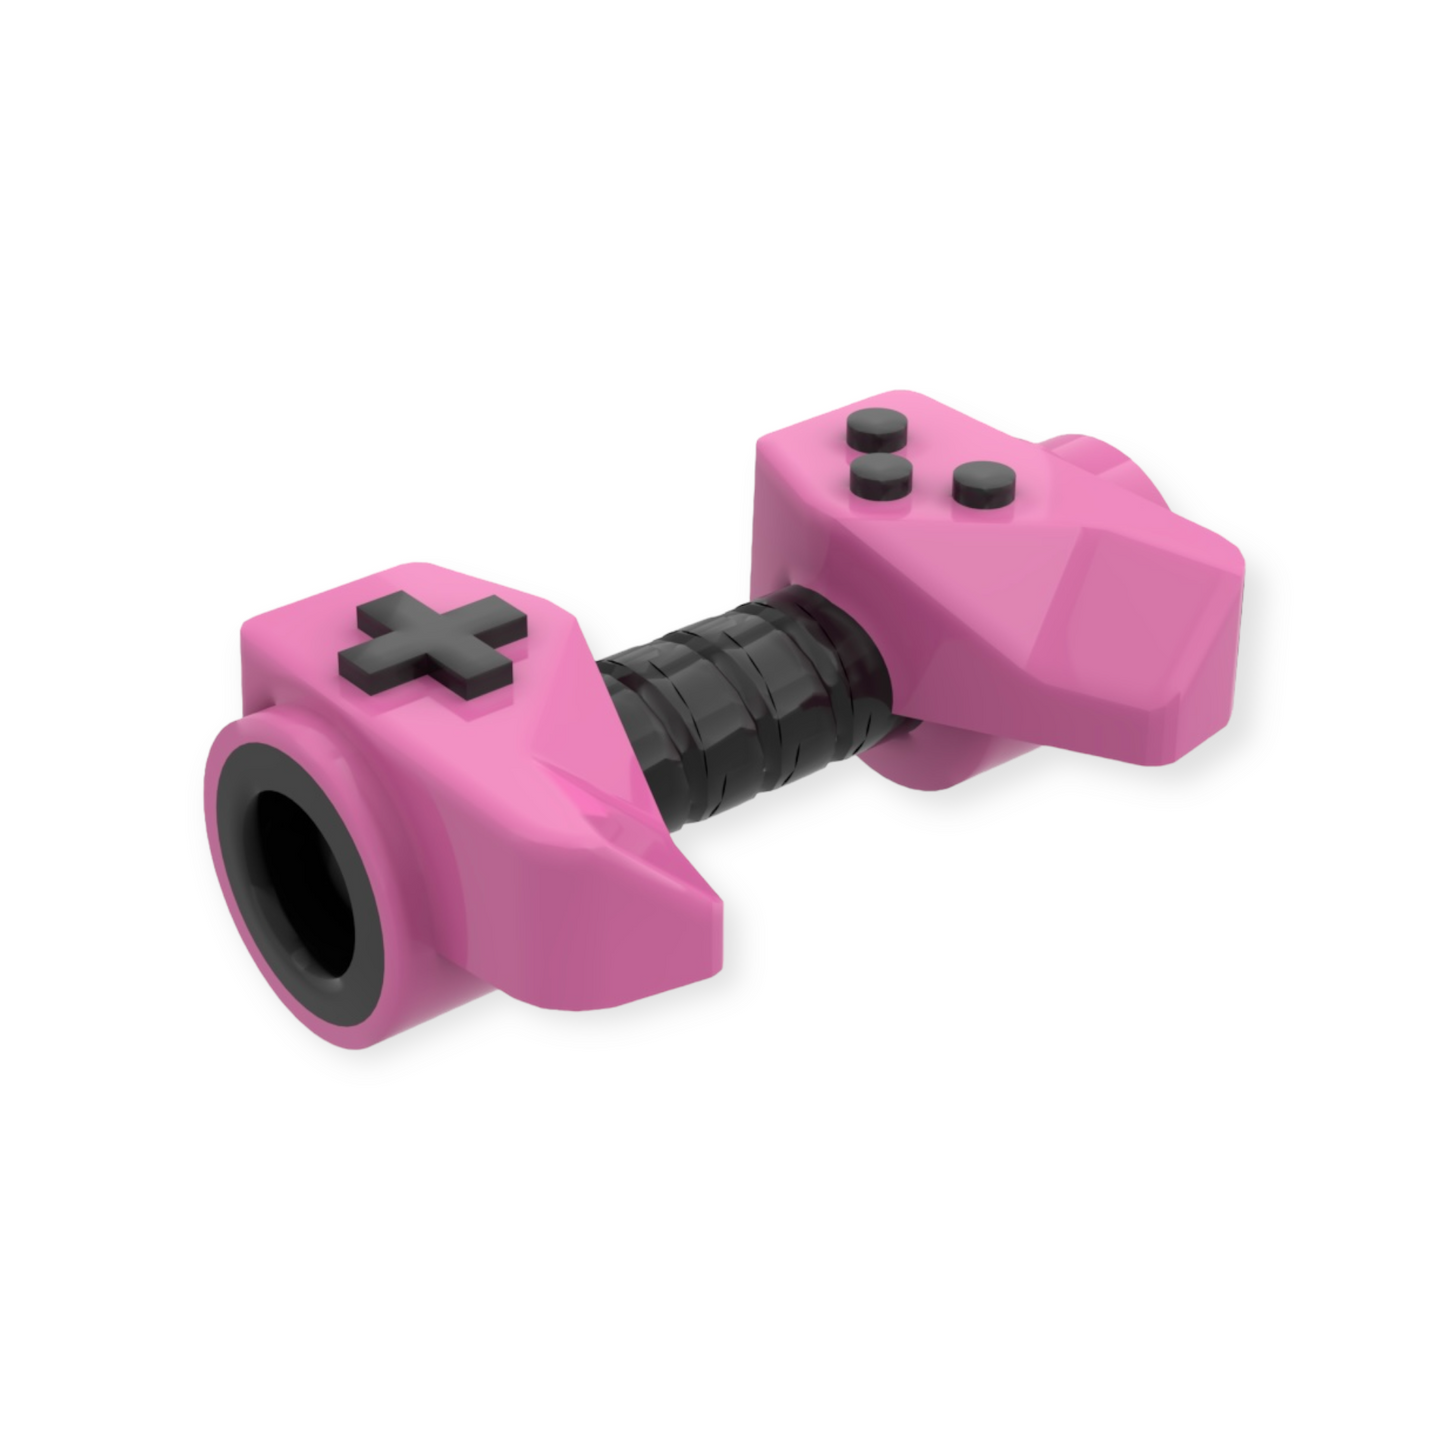 LEGO Game Controller in Dark Pink